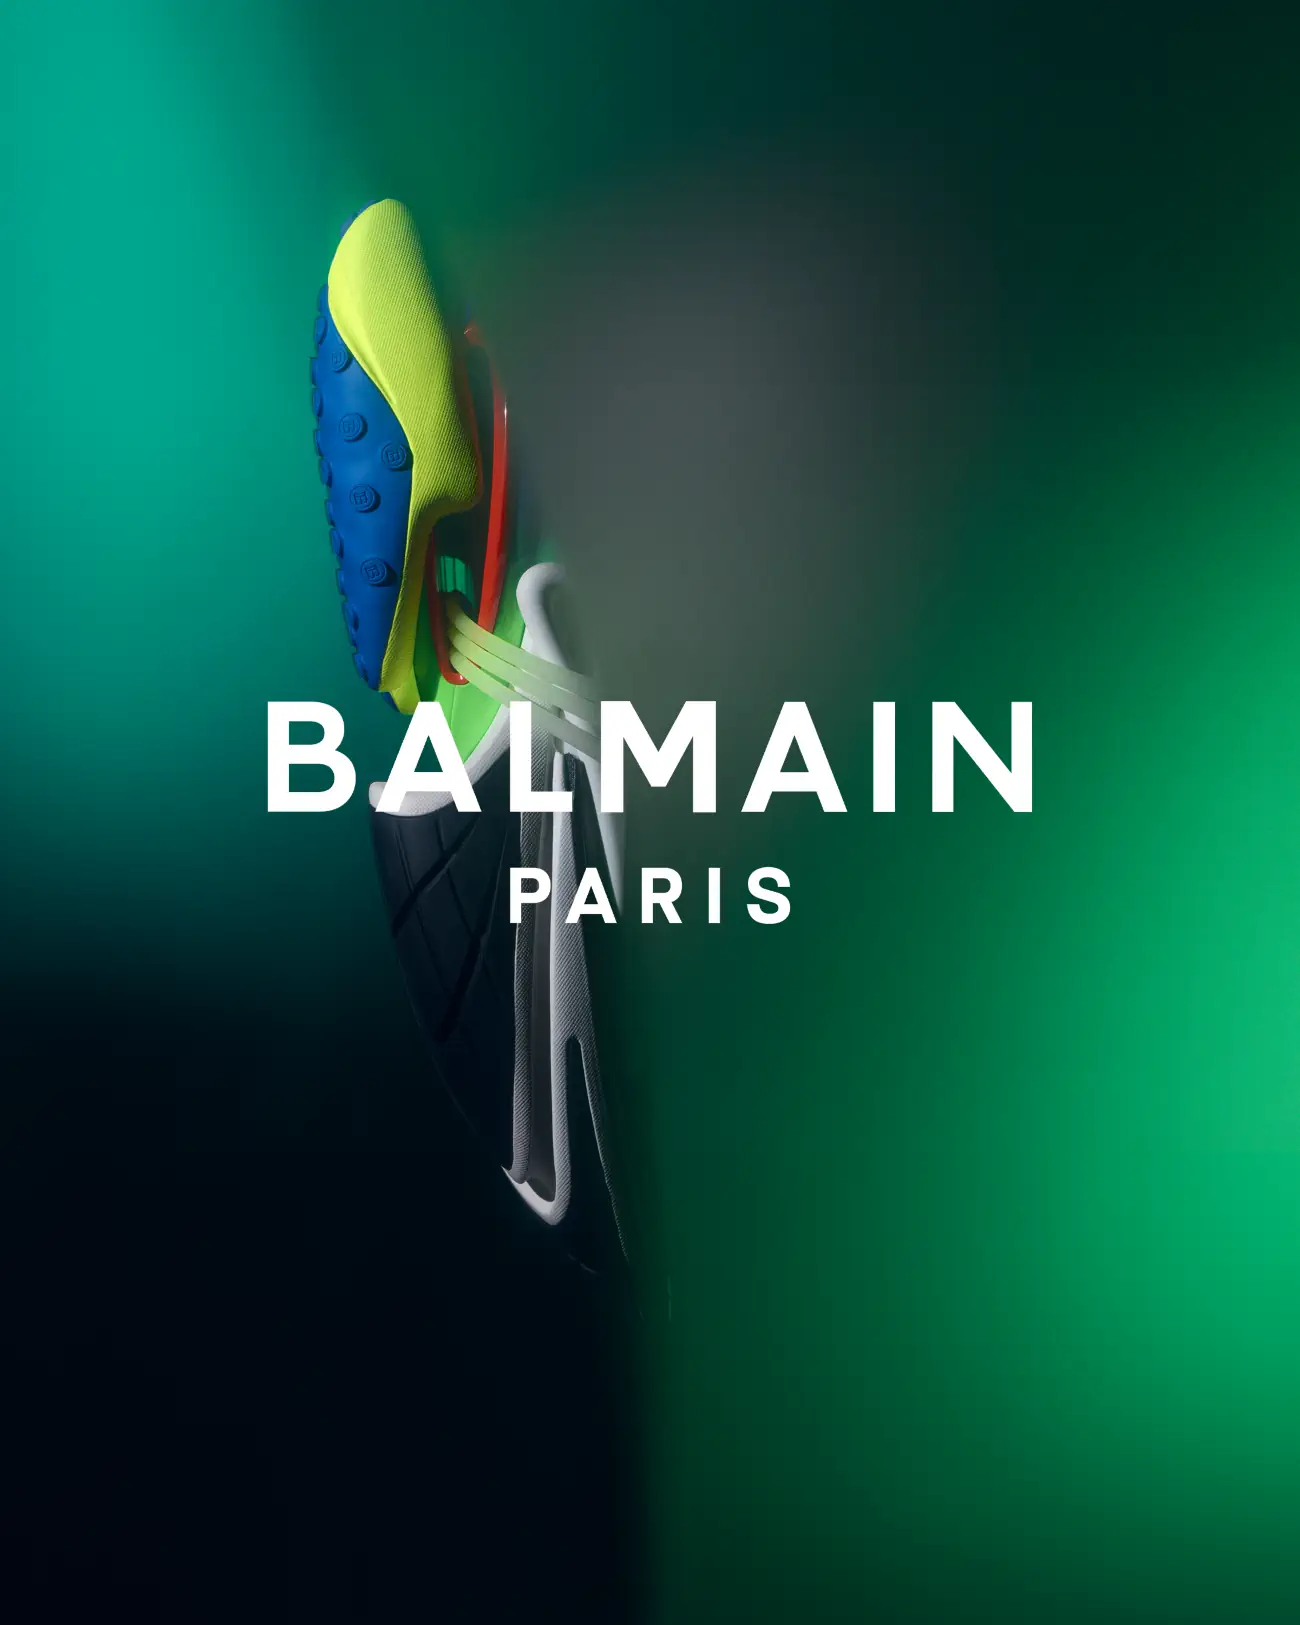 Balmain Men's Fall Winter 2023 campaign evokes Jazz elegance